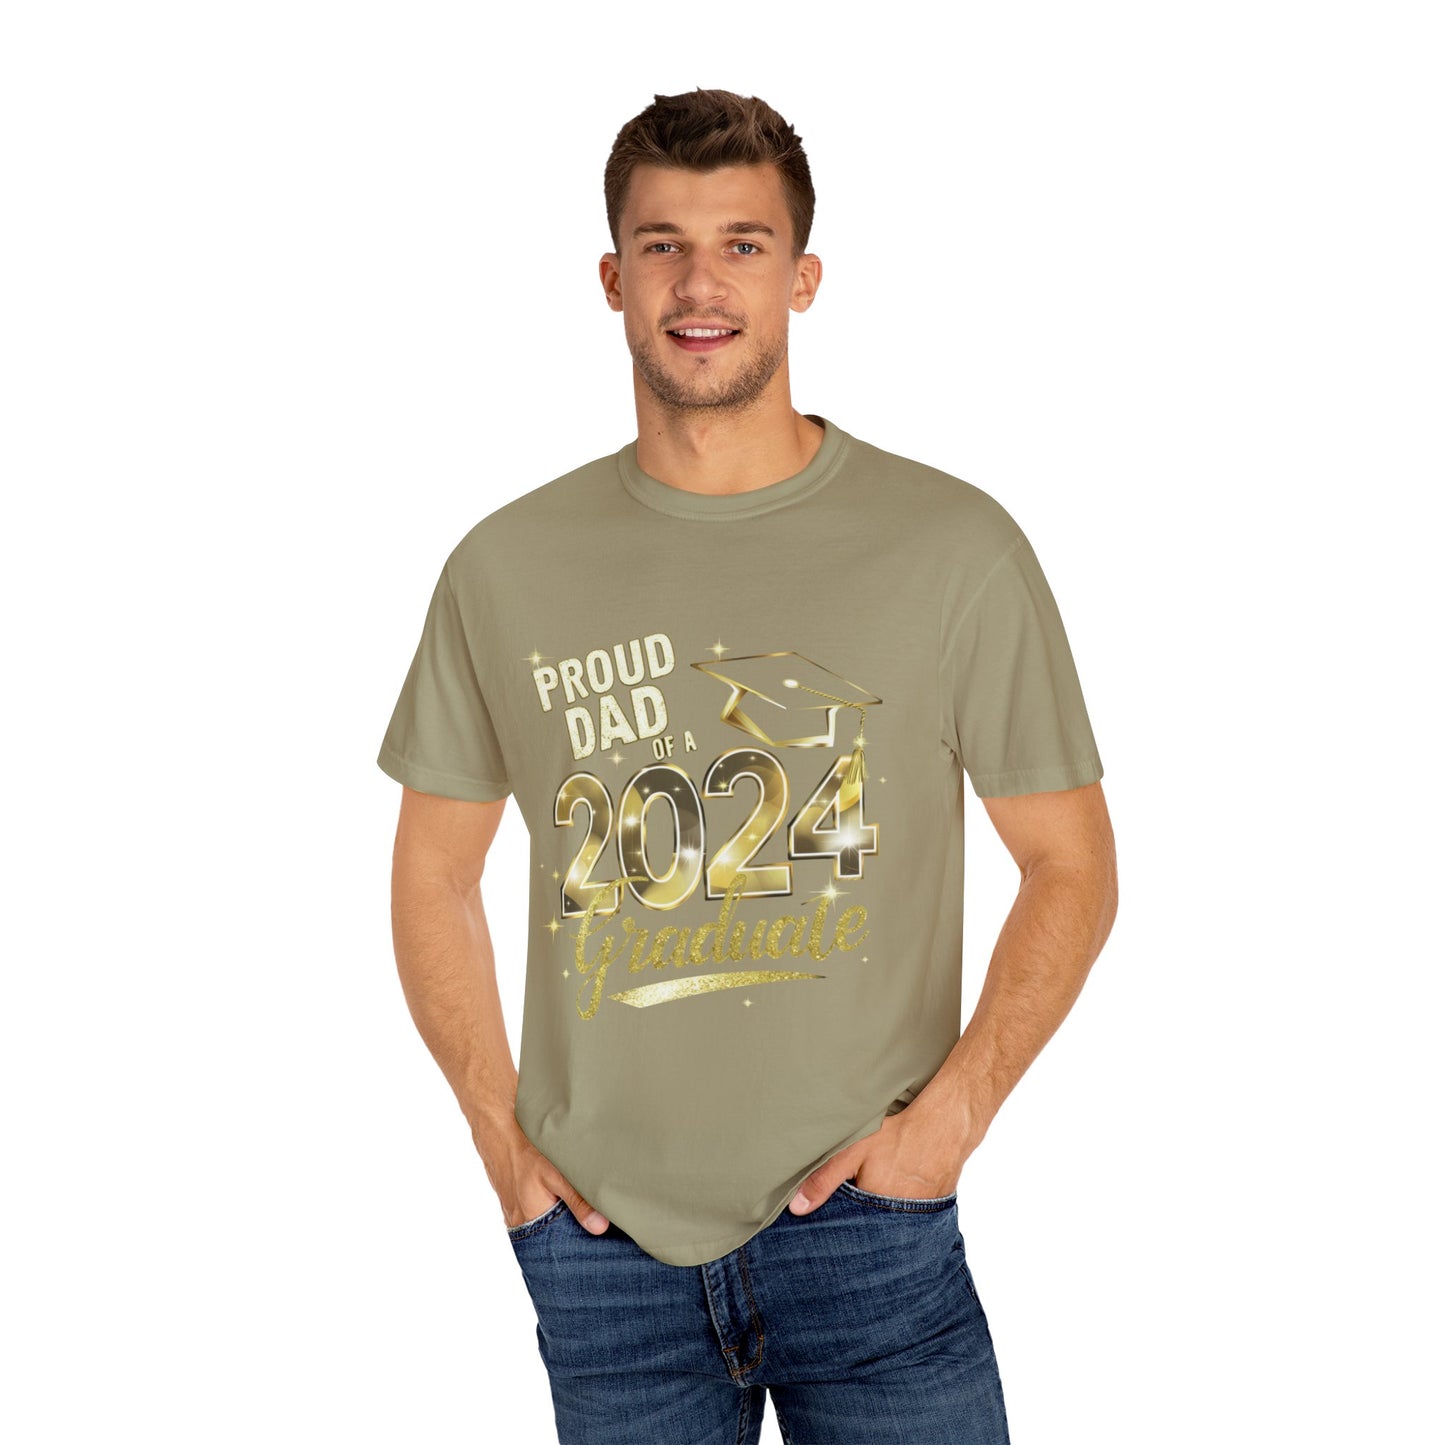 Proud of Dad 2024 Graduate Unisex Garment-dyed T-shirt Cotton Funny Humorous Graphic Soft Premium Unisex Men Women Khaki T-shirt Birthday Gift-48